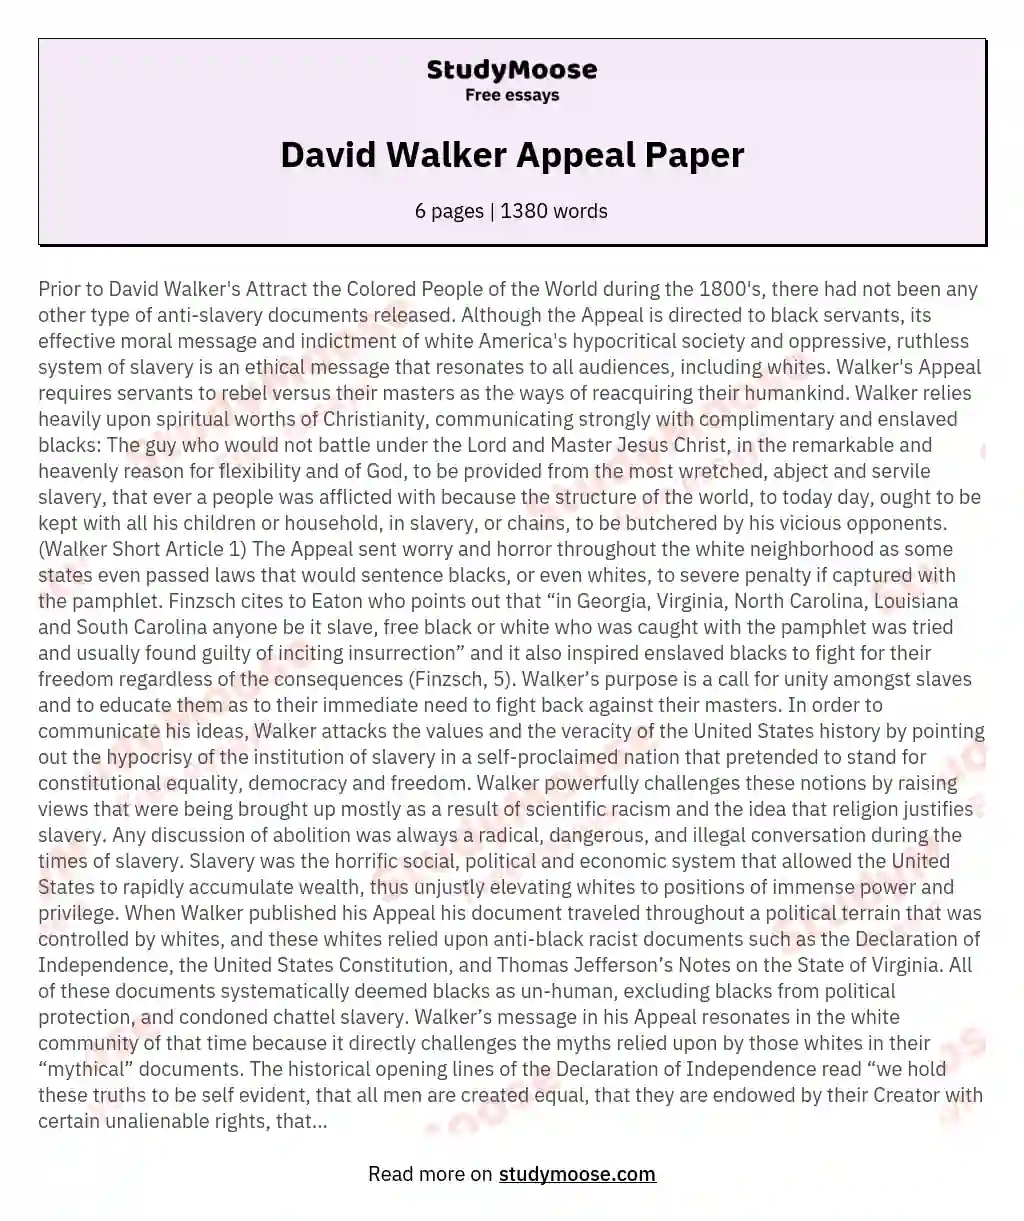 David Walker Appeal Paper essay